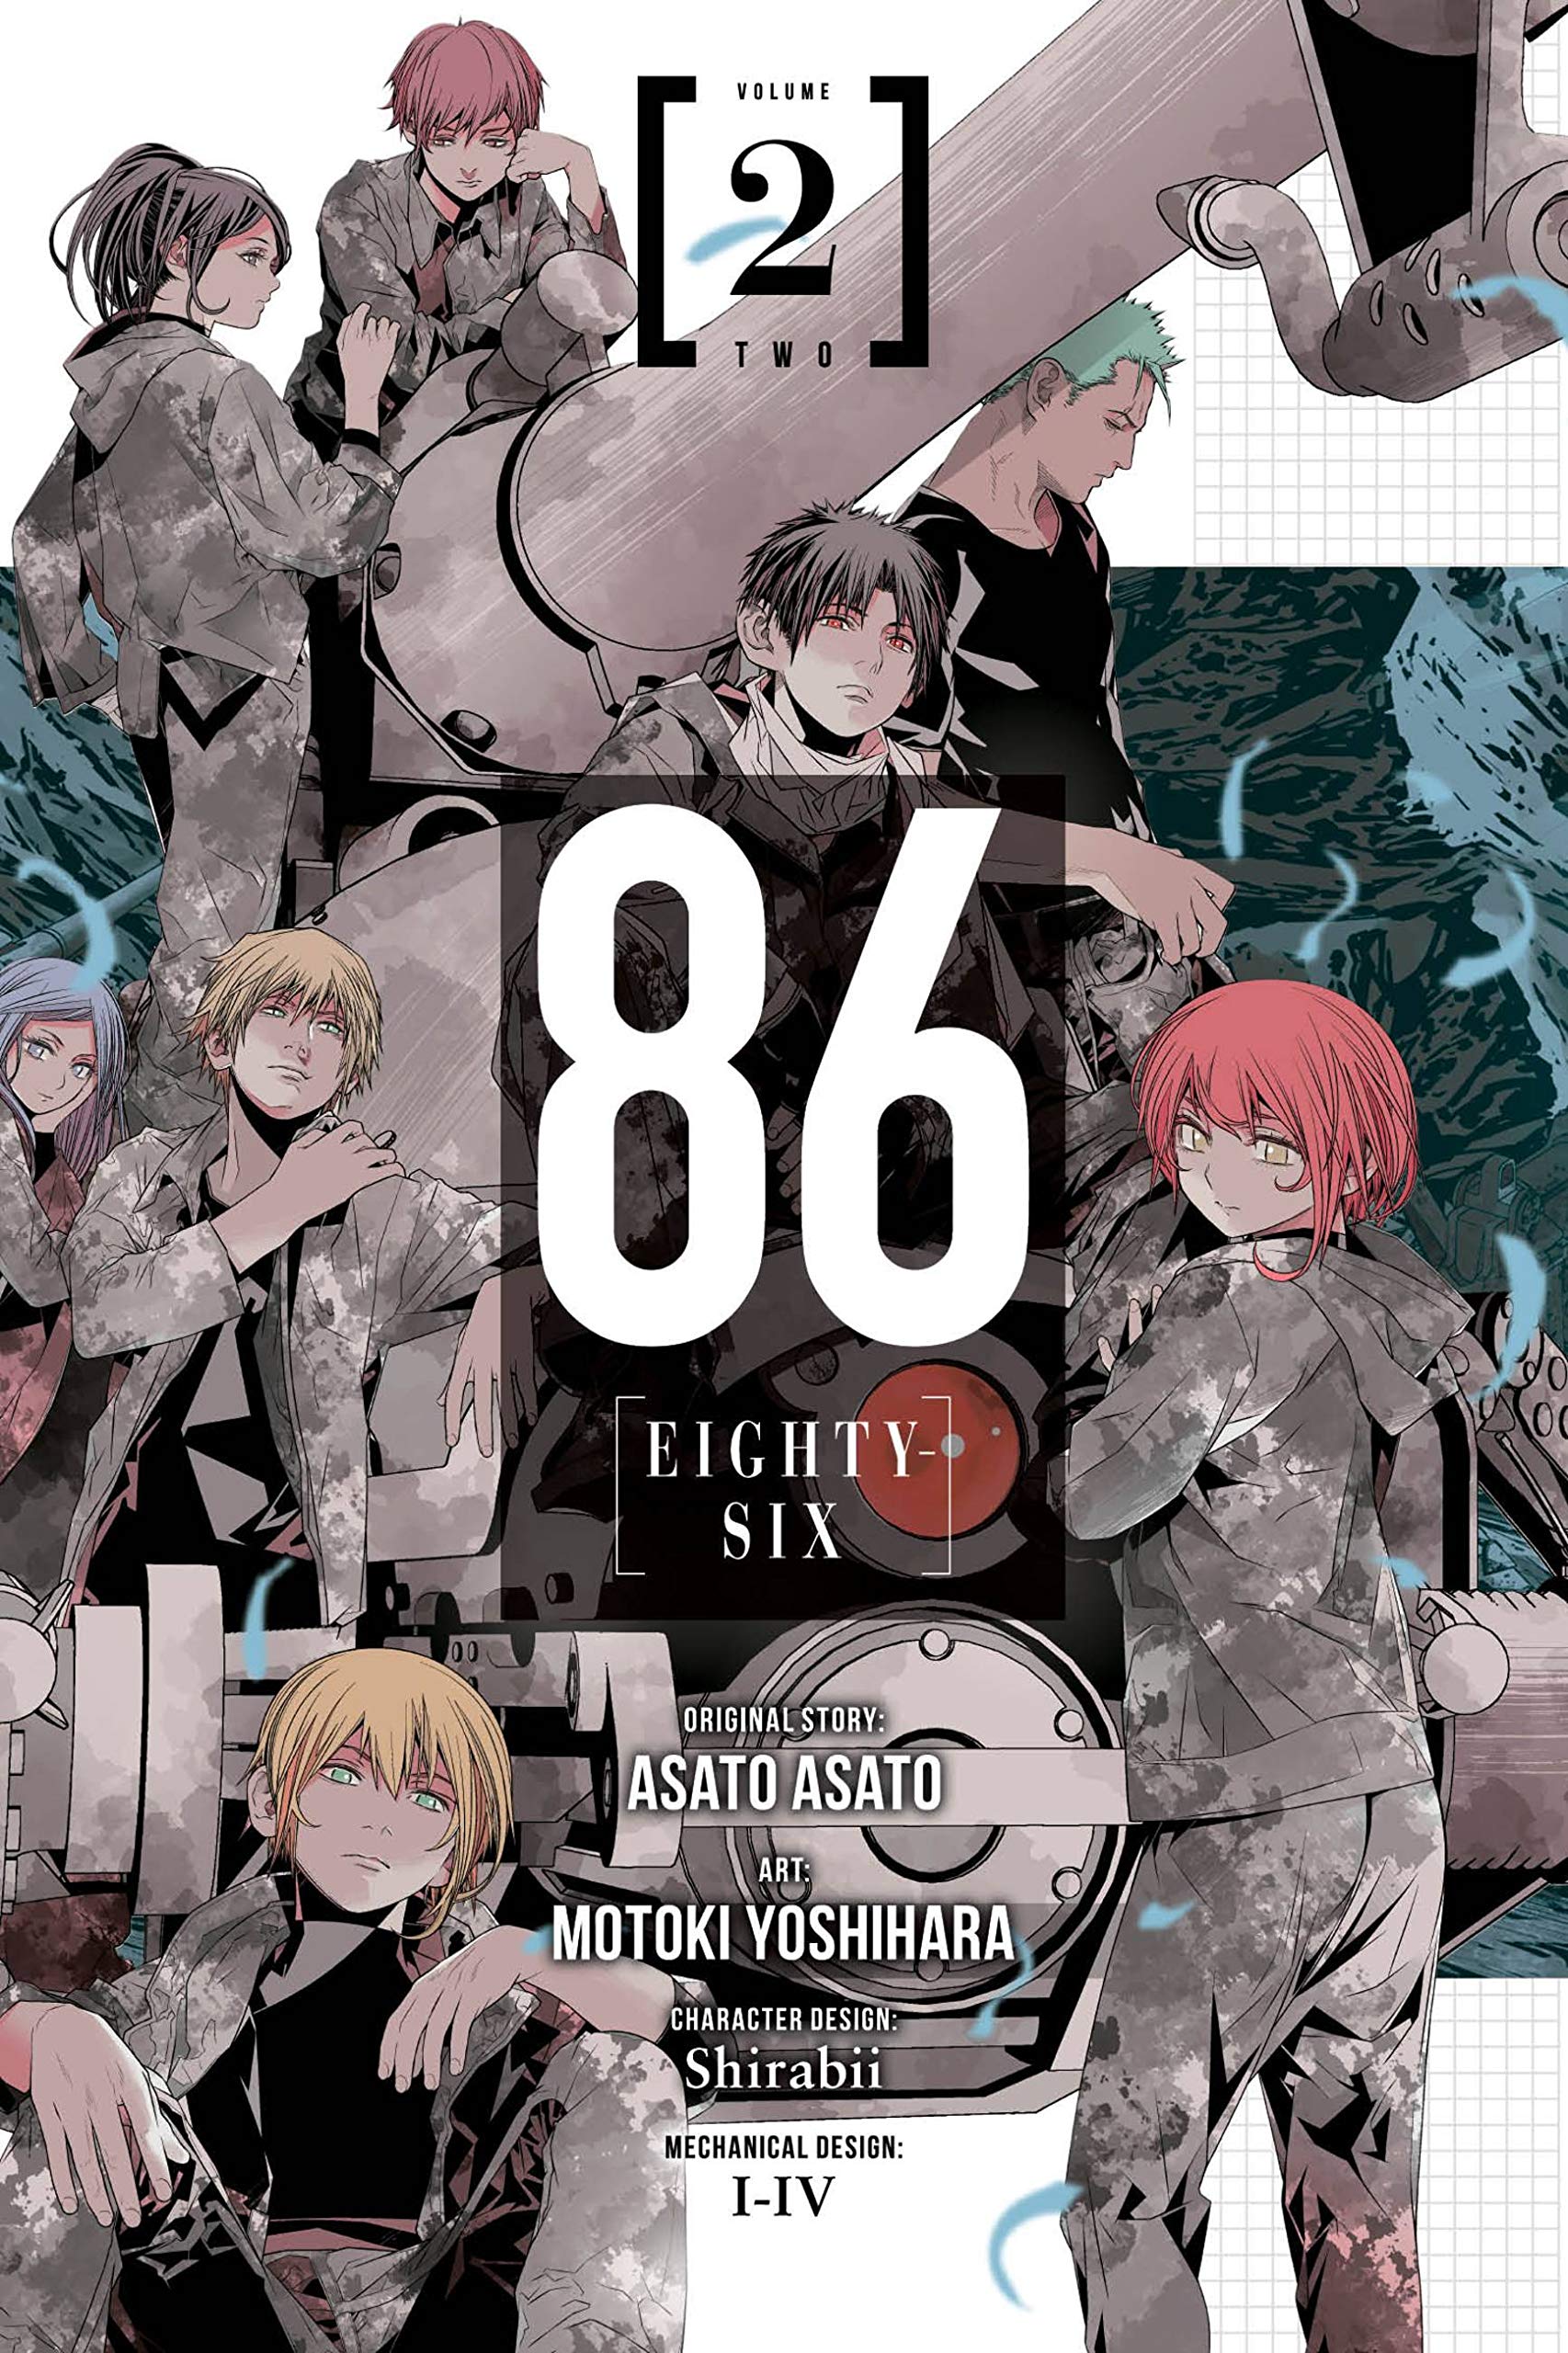 Manga Chapter 2, 86 - Eighty Six - Wiki